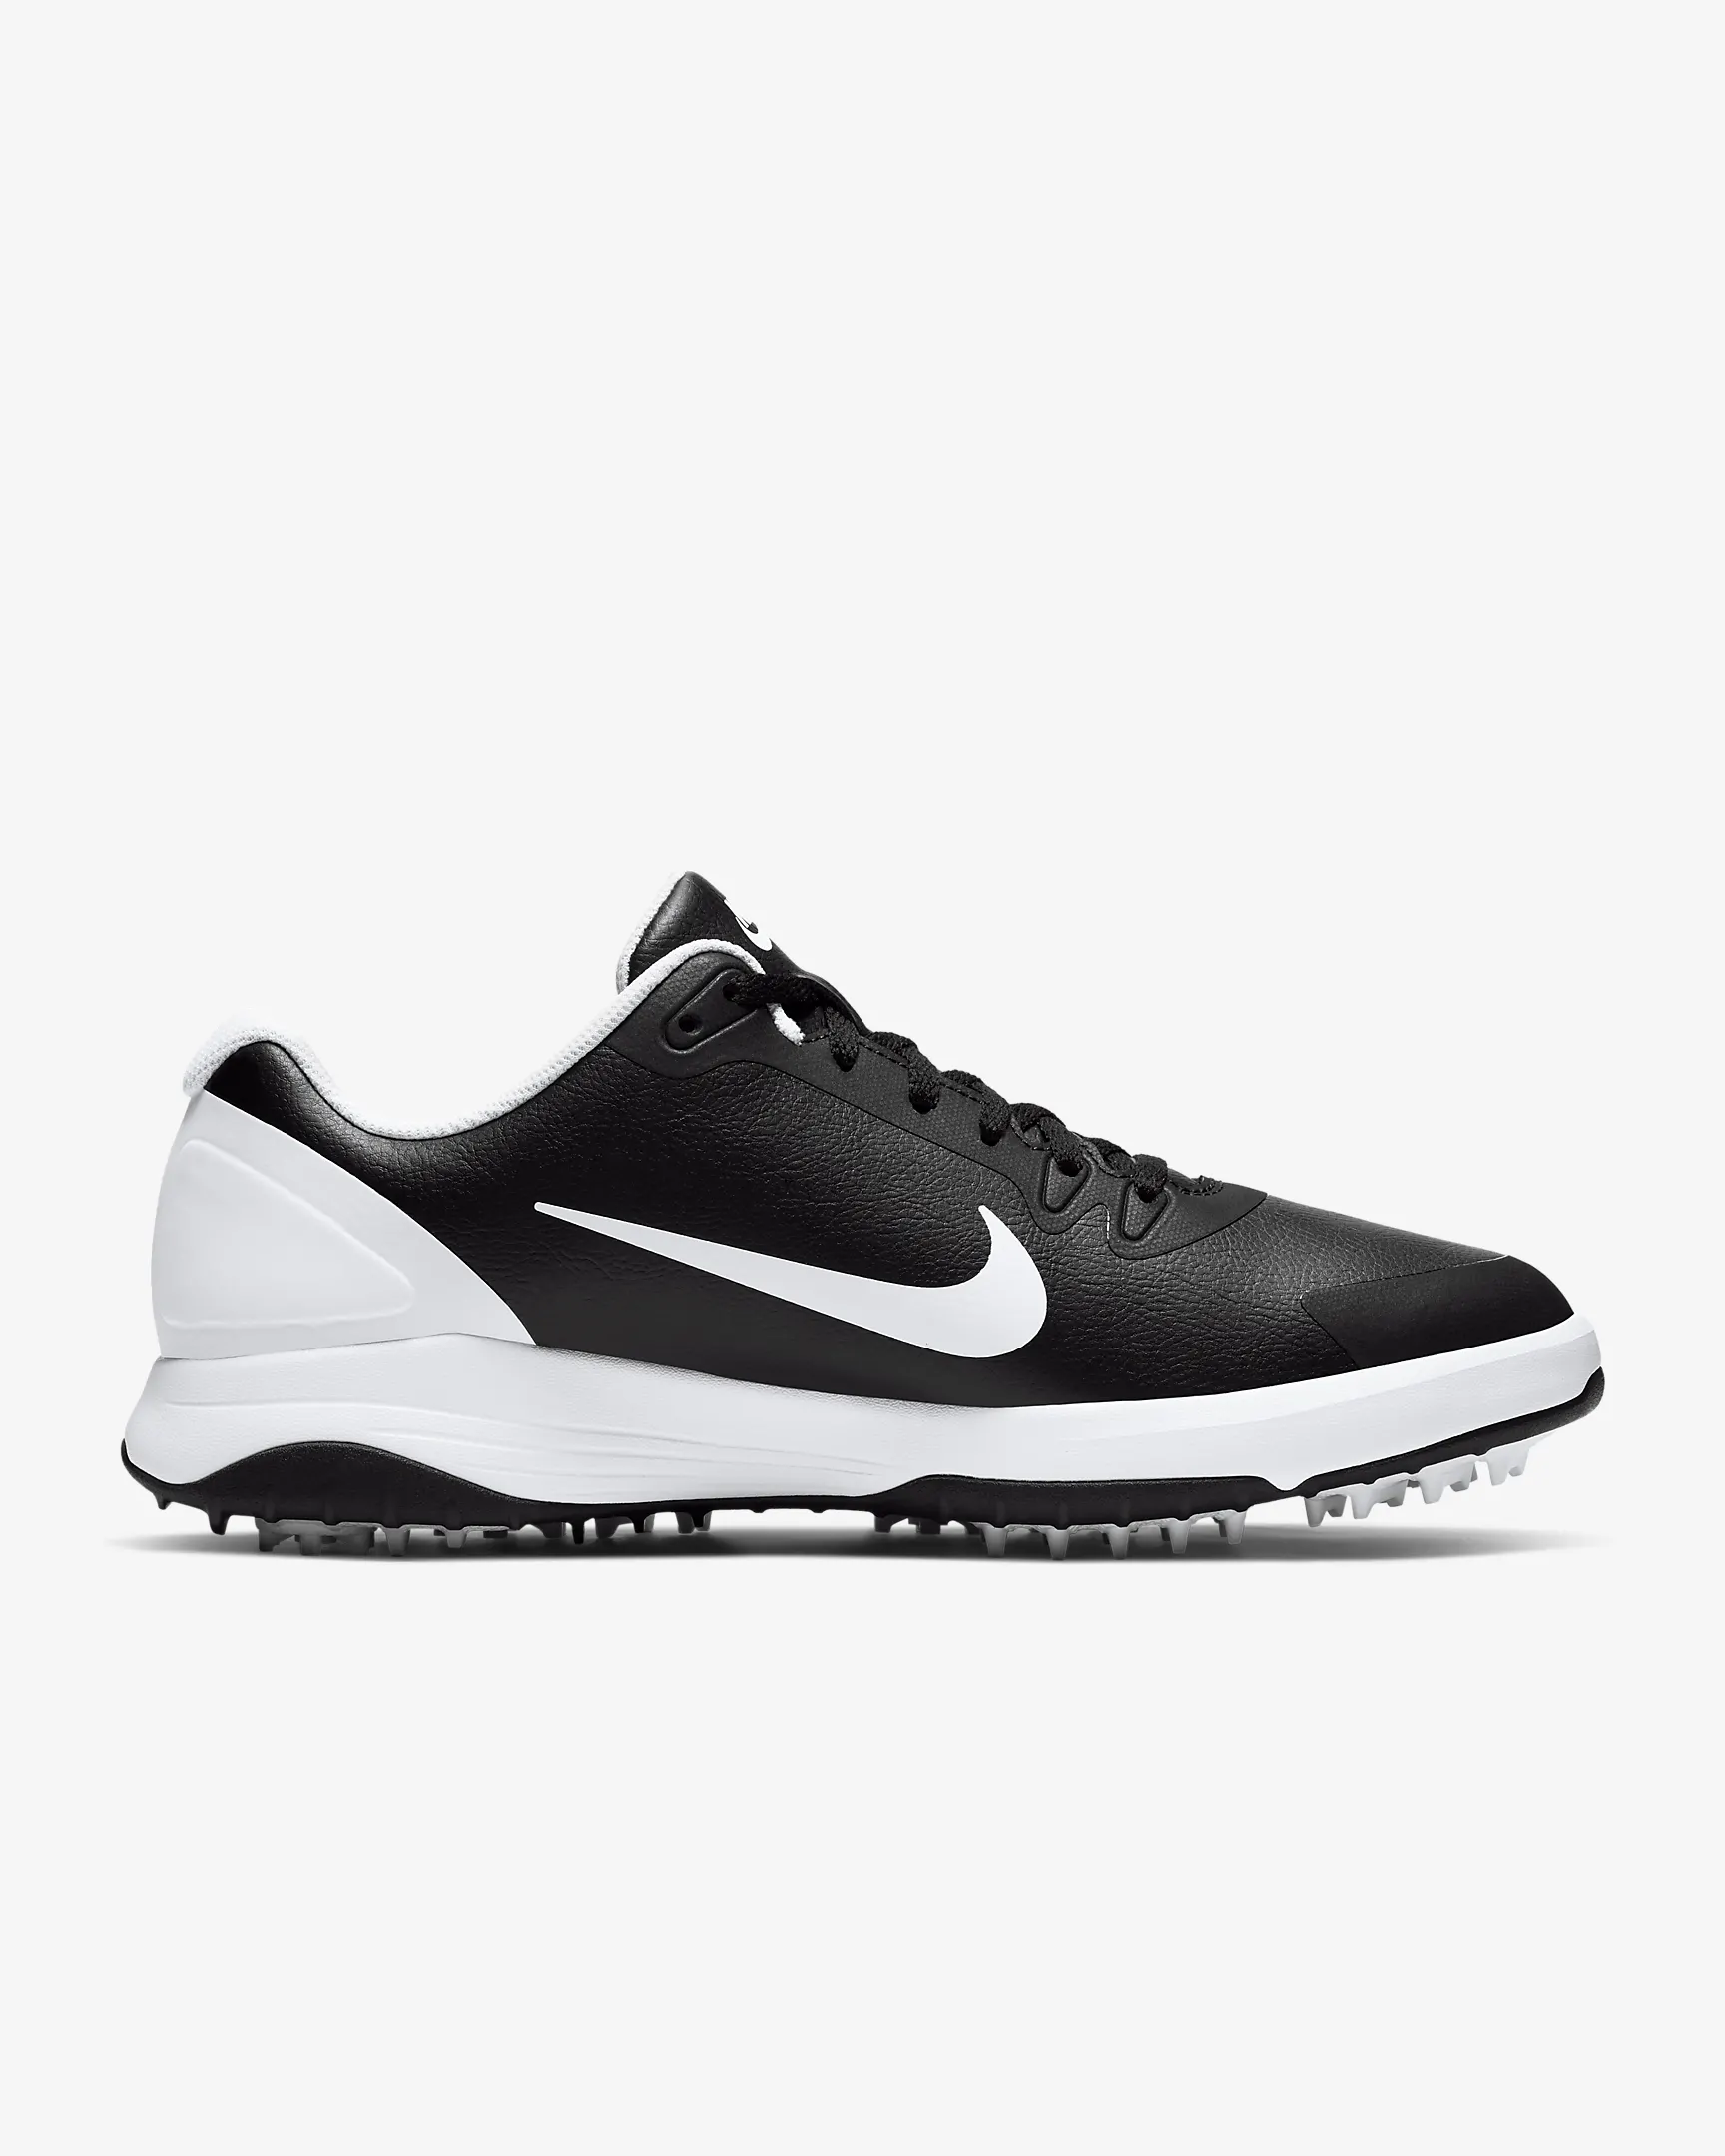 Nike | CT0531-001 | Infinity G | Black/White